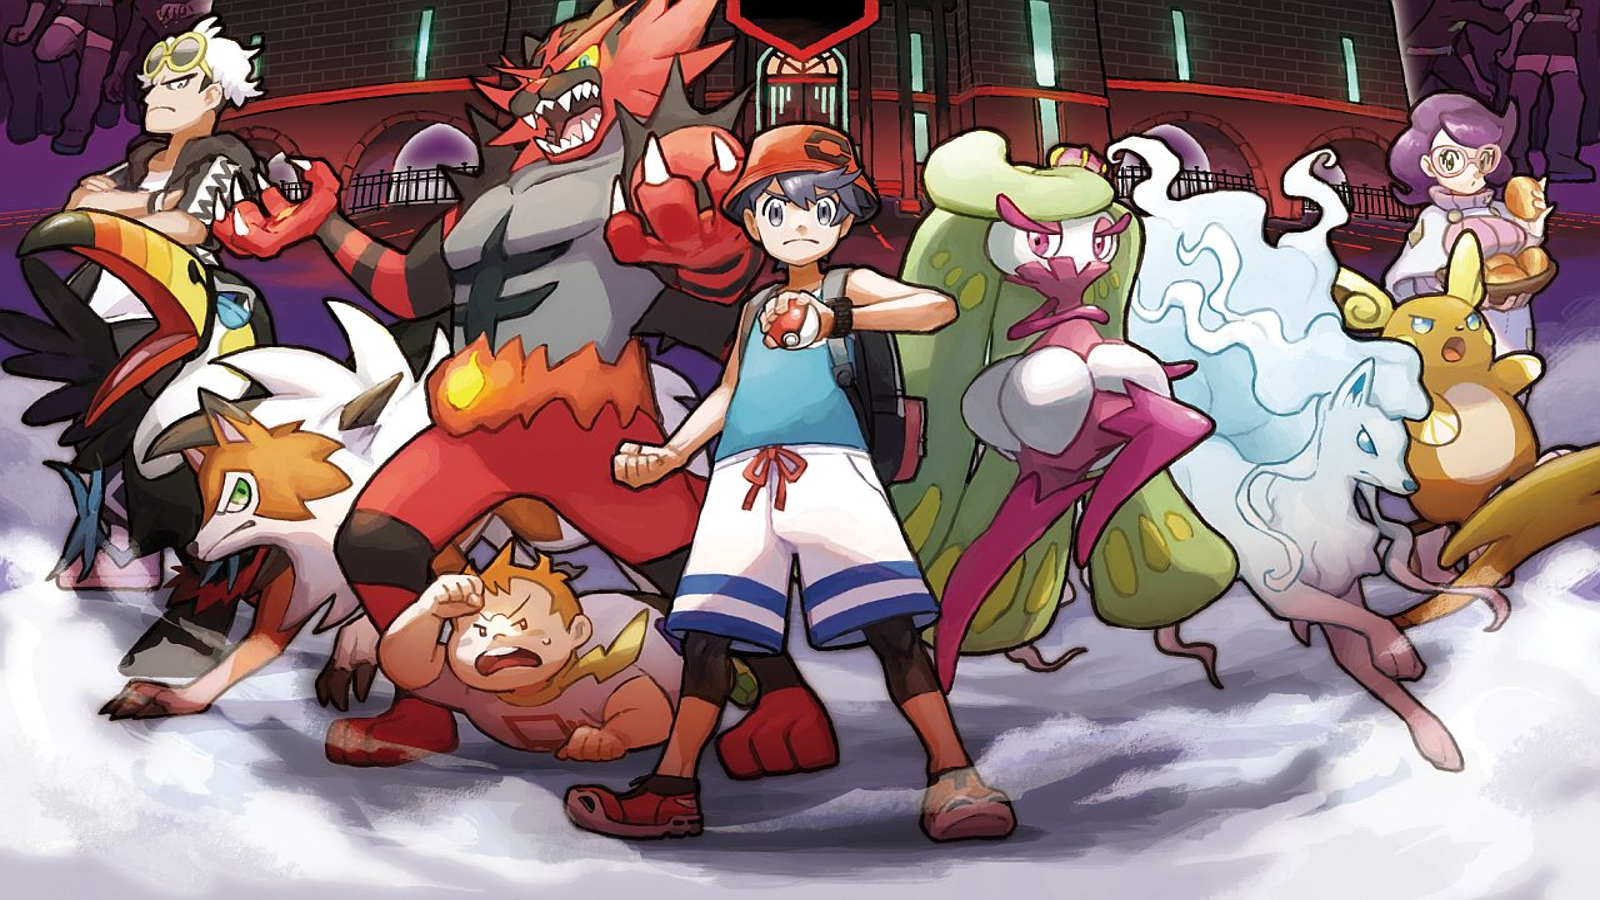 HD wallpaper: Pokémon, Pokémon Ultra Sun and Ultra Moon, Lunala (Pokémon)